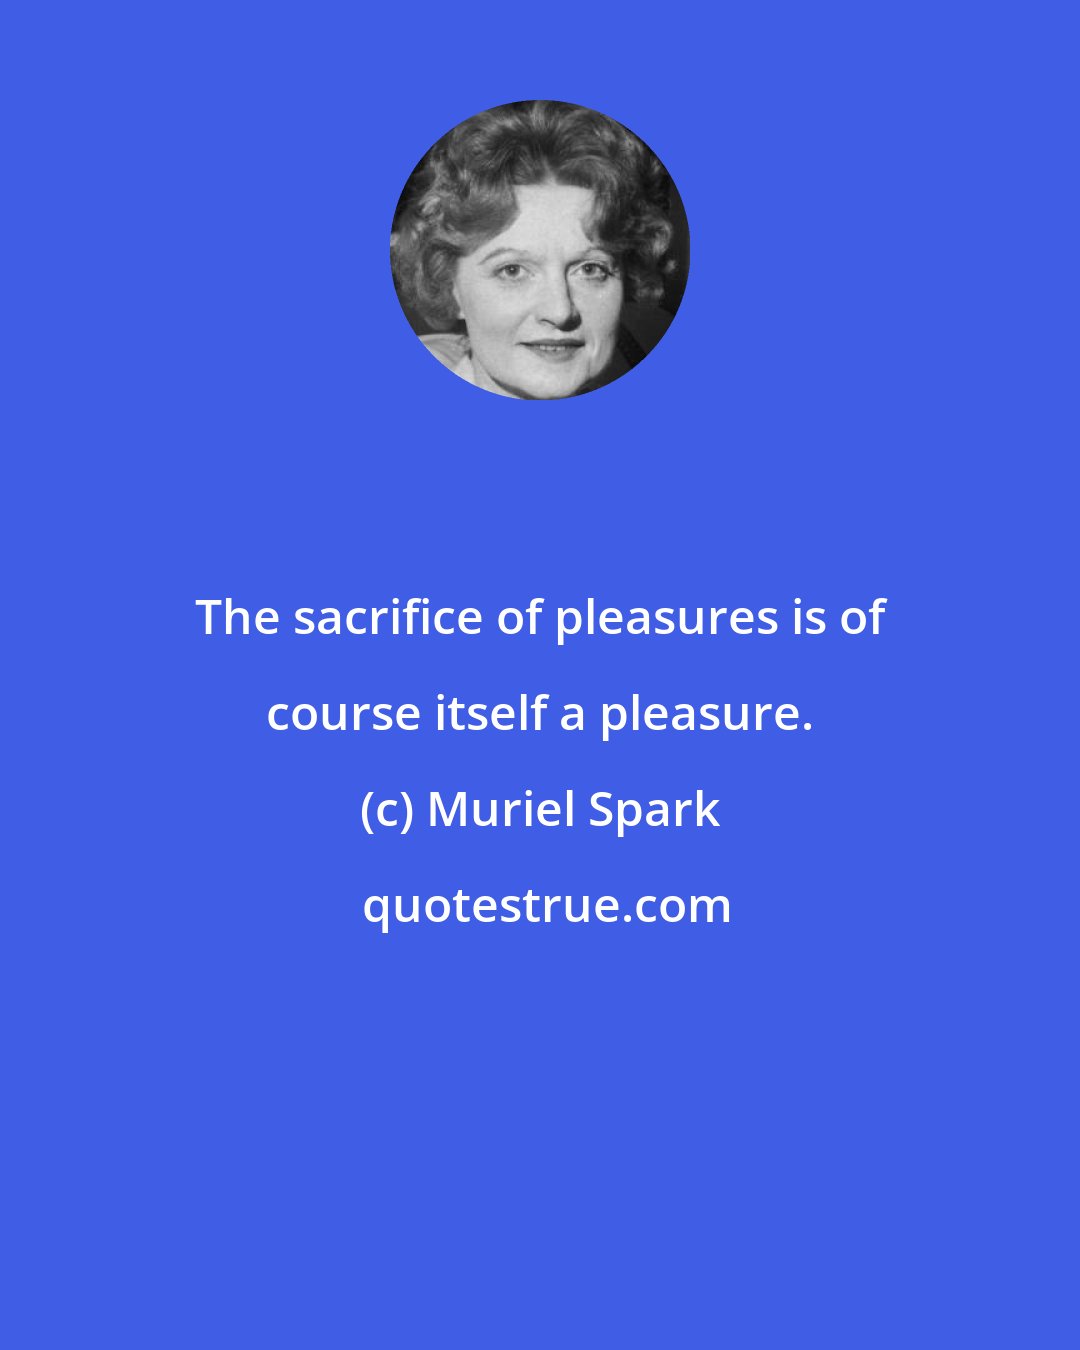 Muriel Spark: The sacrifice of pleasures is of course itself a pleasure.